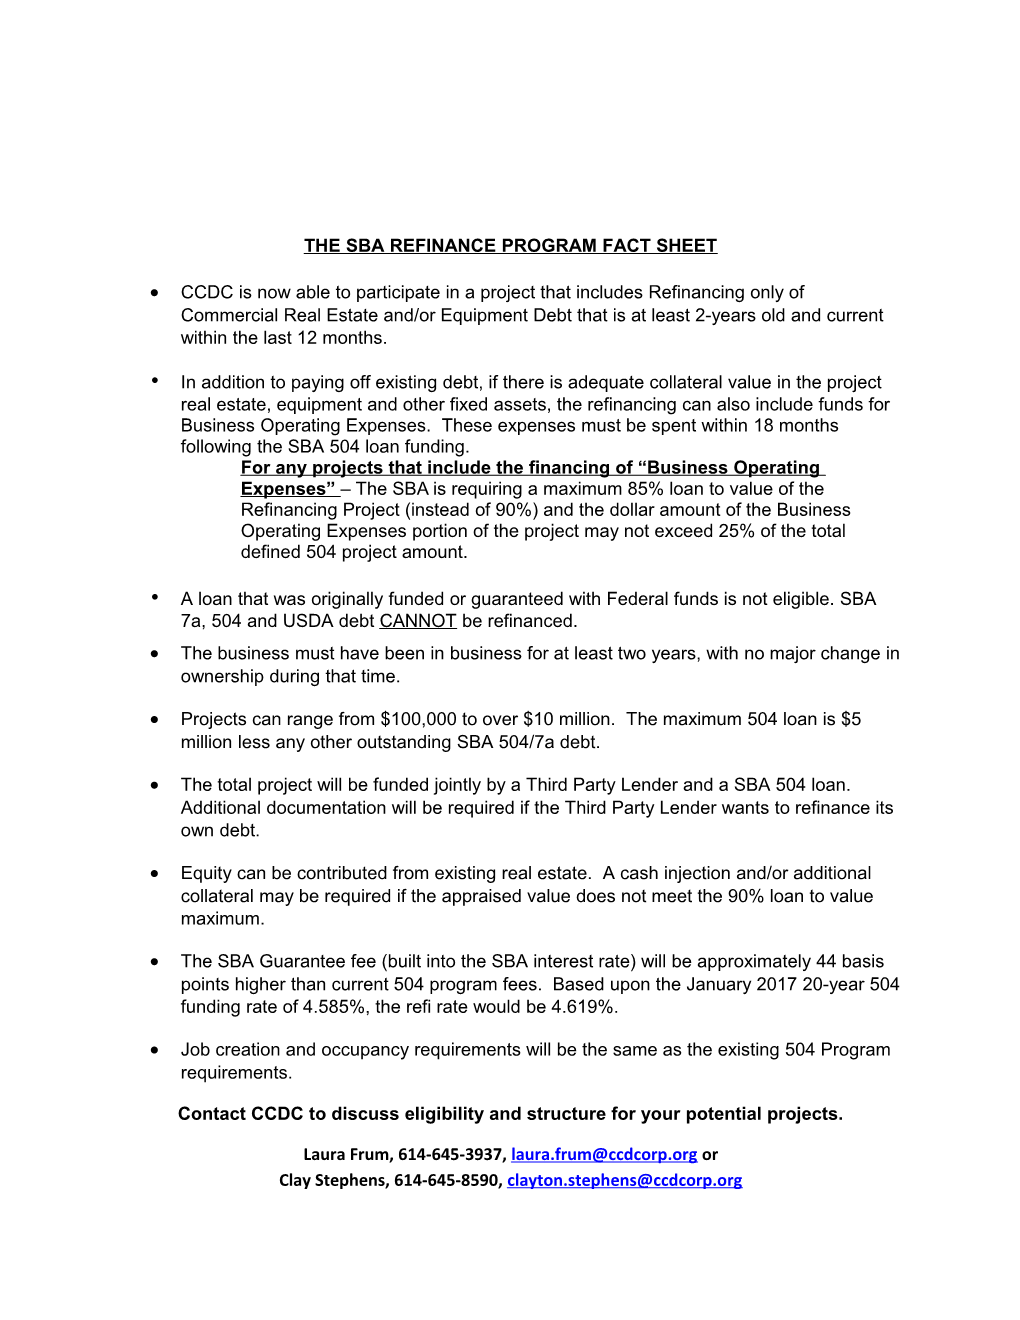 The Sba Refinance Program Fact Sheet